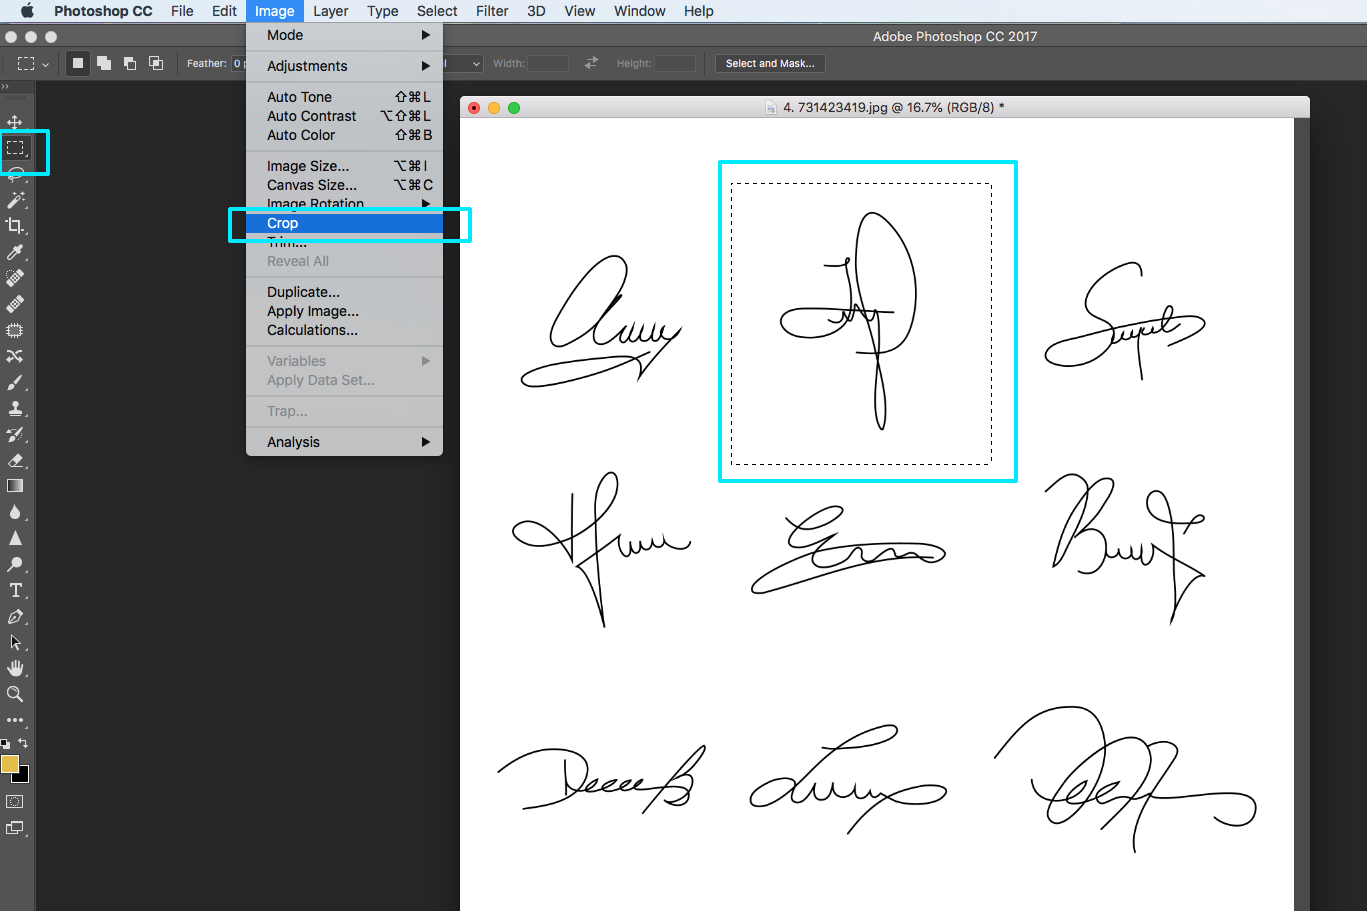 How to create Signature Photoshop